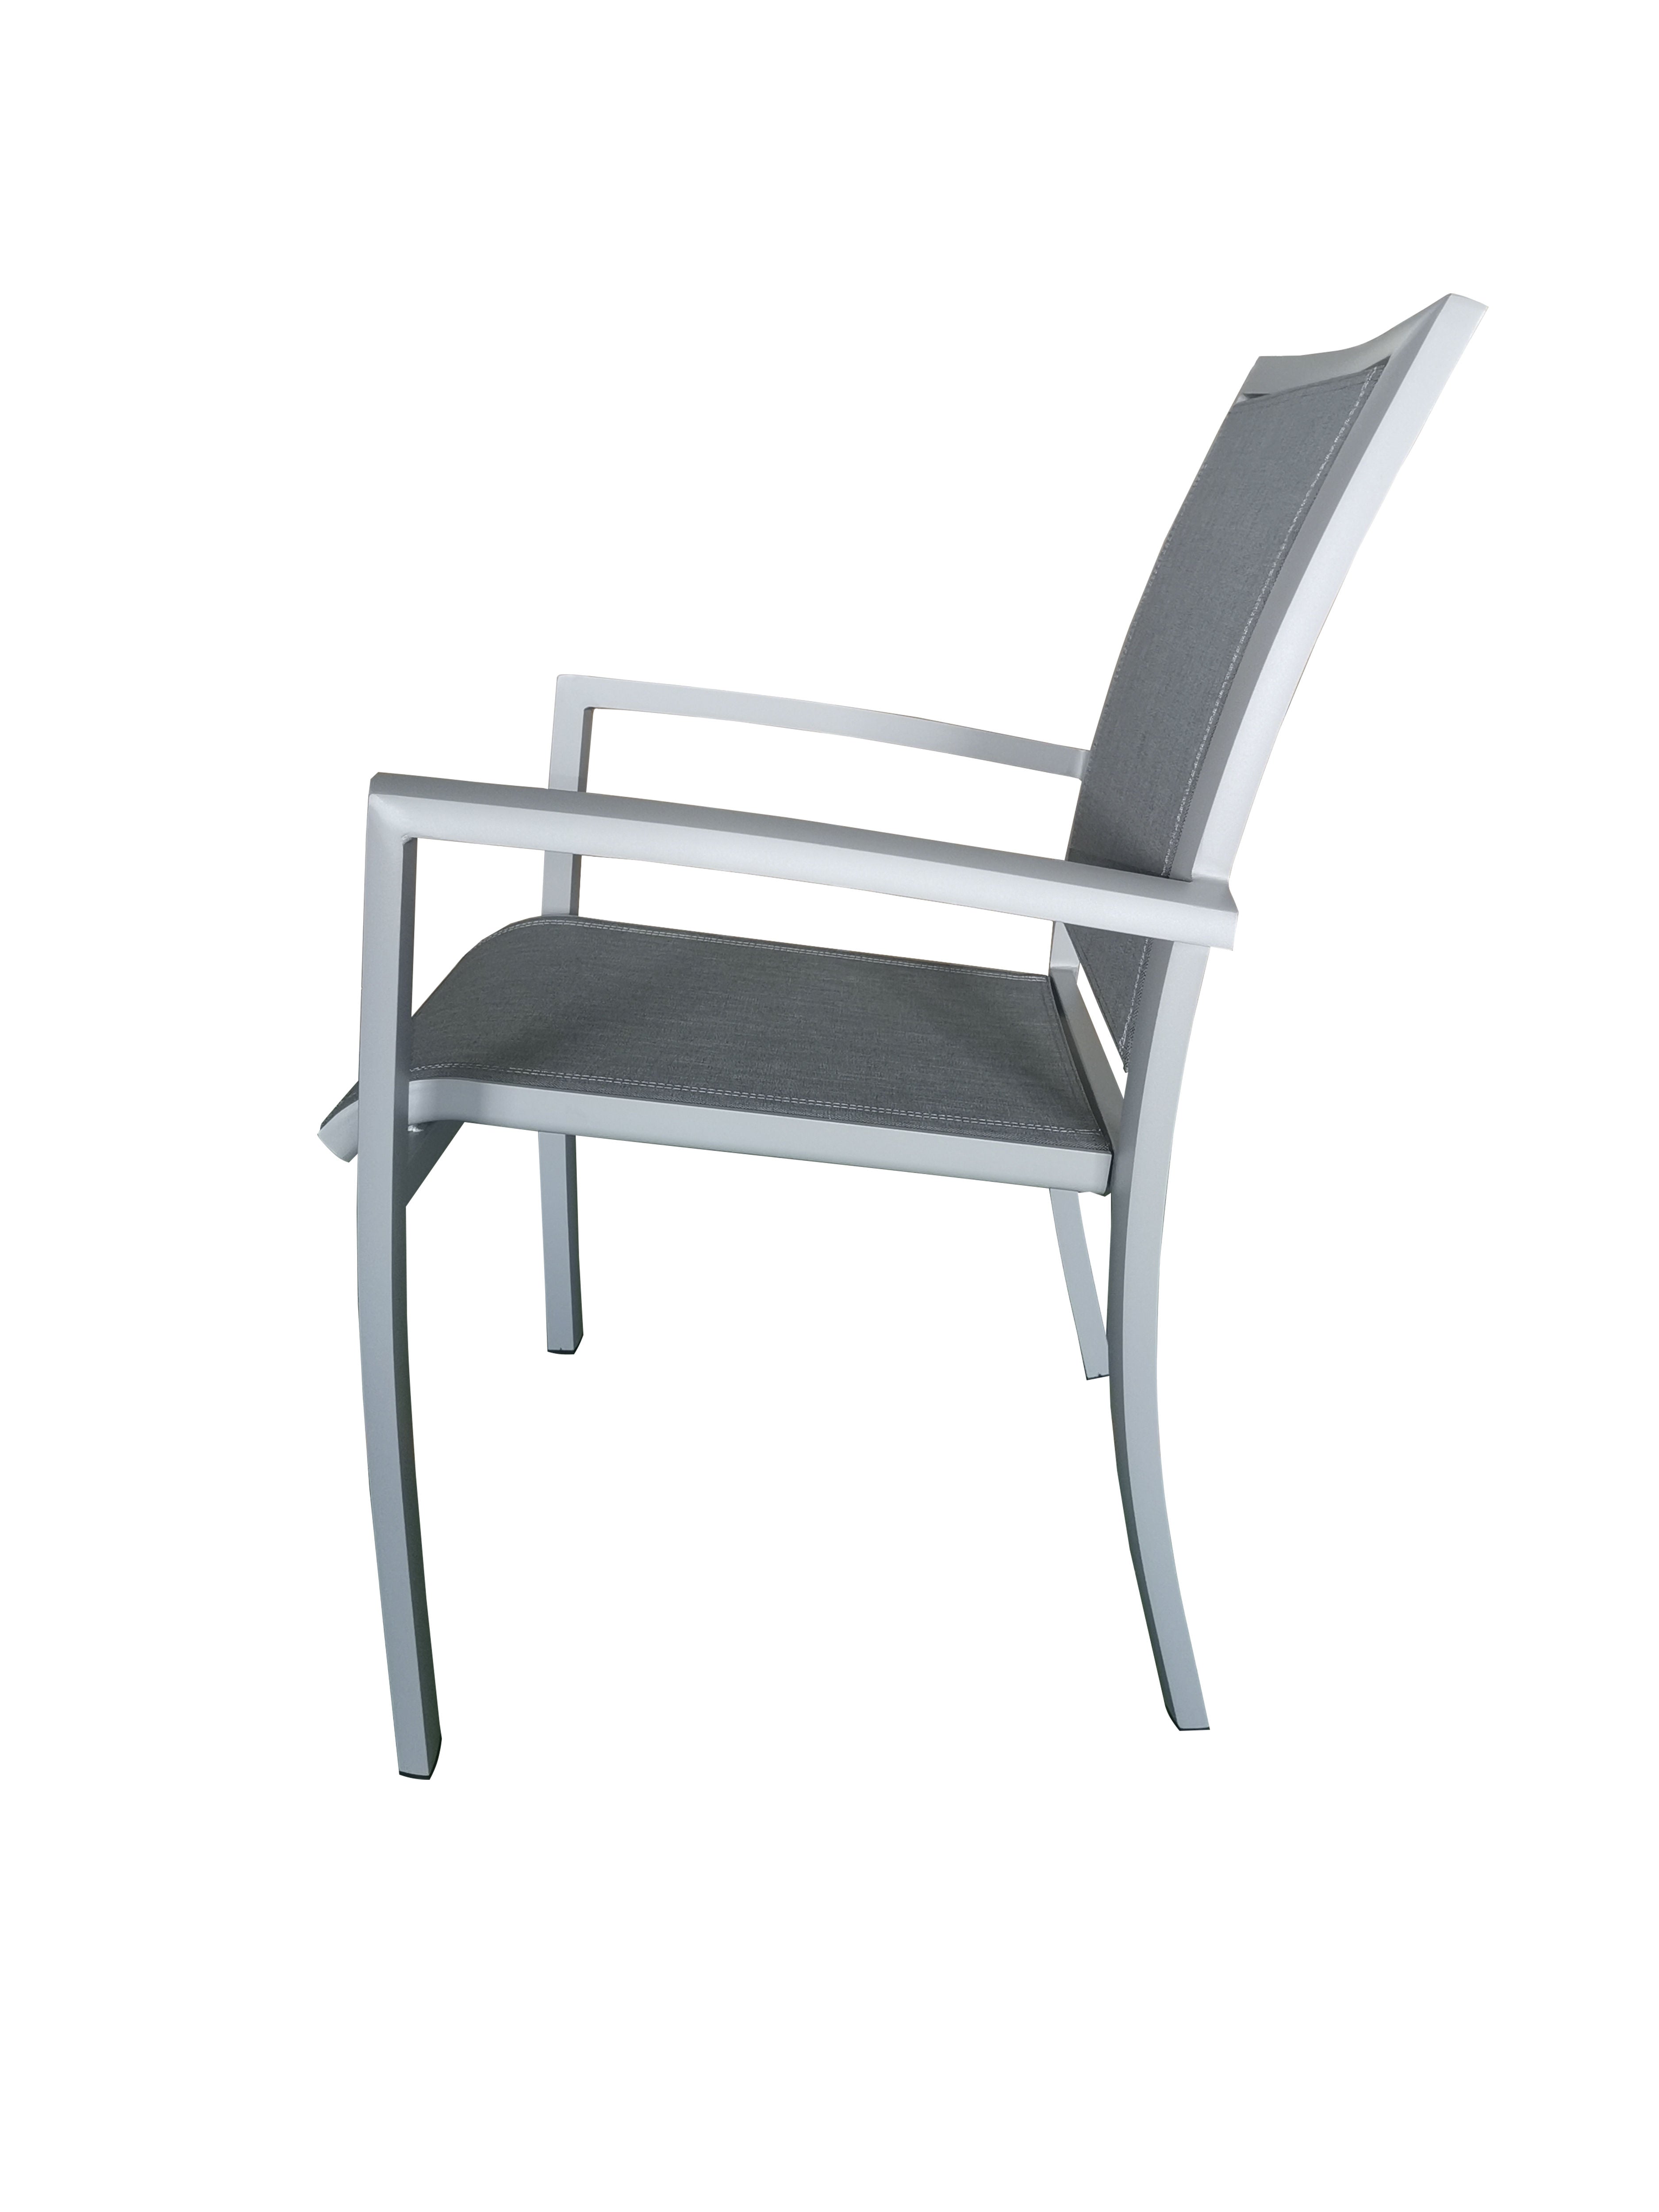 MOSS MOSS-T317GPM - Akumal Collection, Light grey matte aluminum stackable chair with grey mix textilene seat 24" x 31" x H 36"